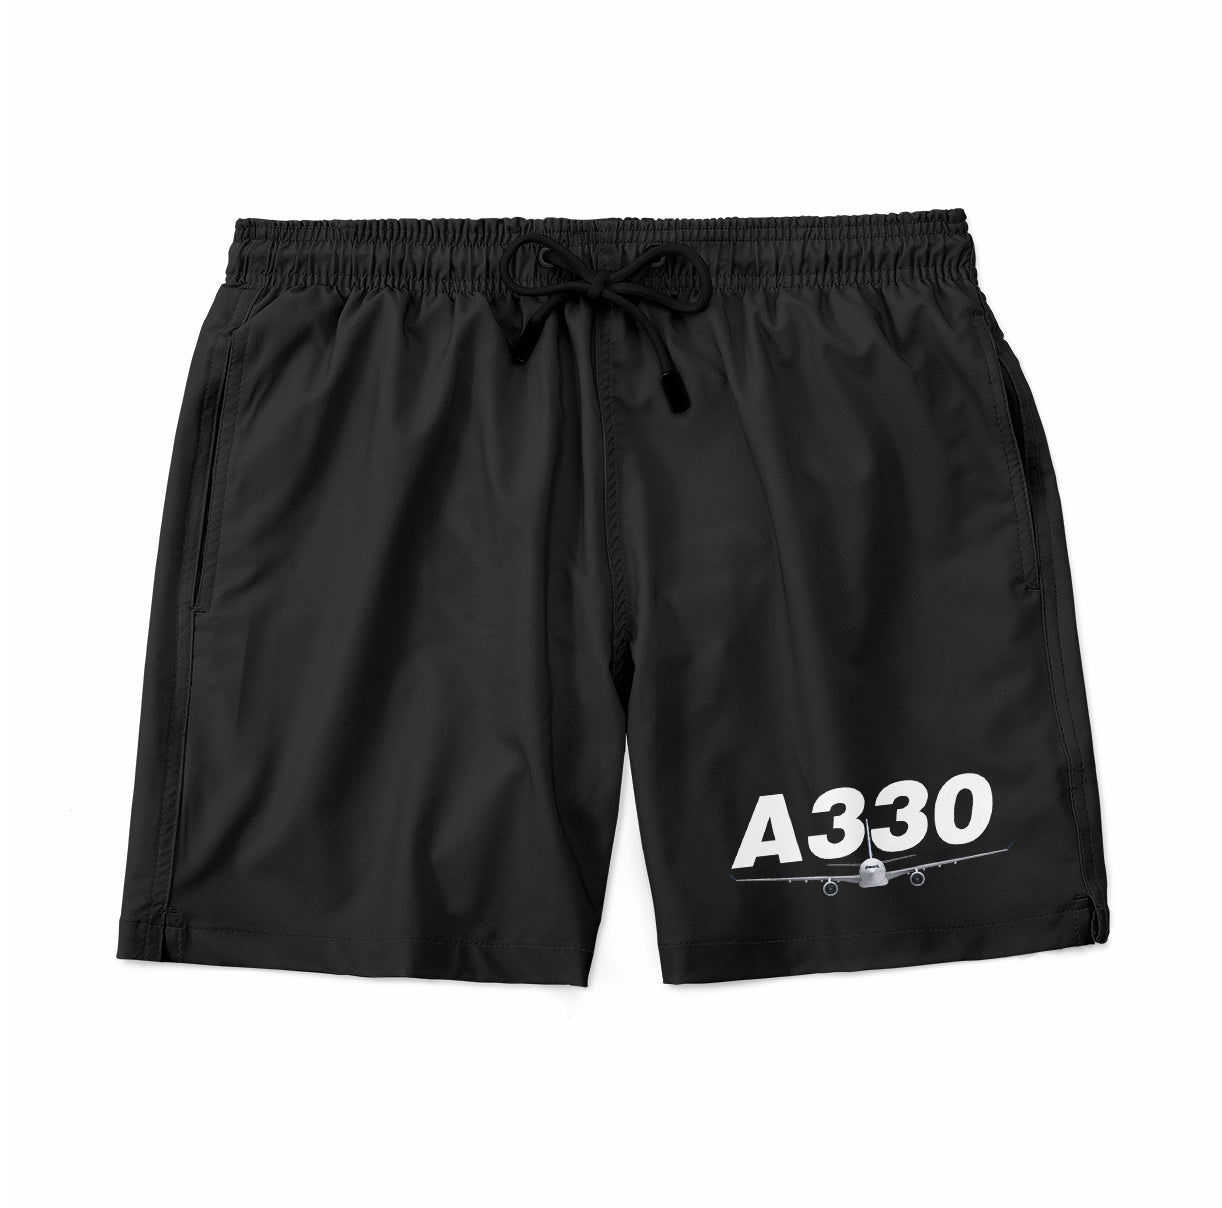 Super Airbus A330 Designed Swim Trunks & Shorts